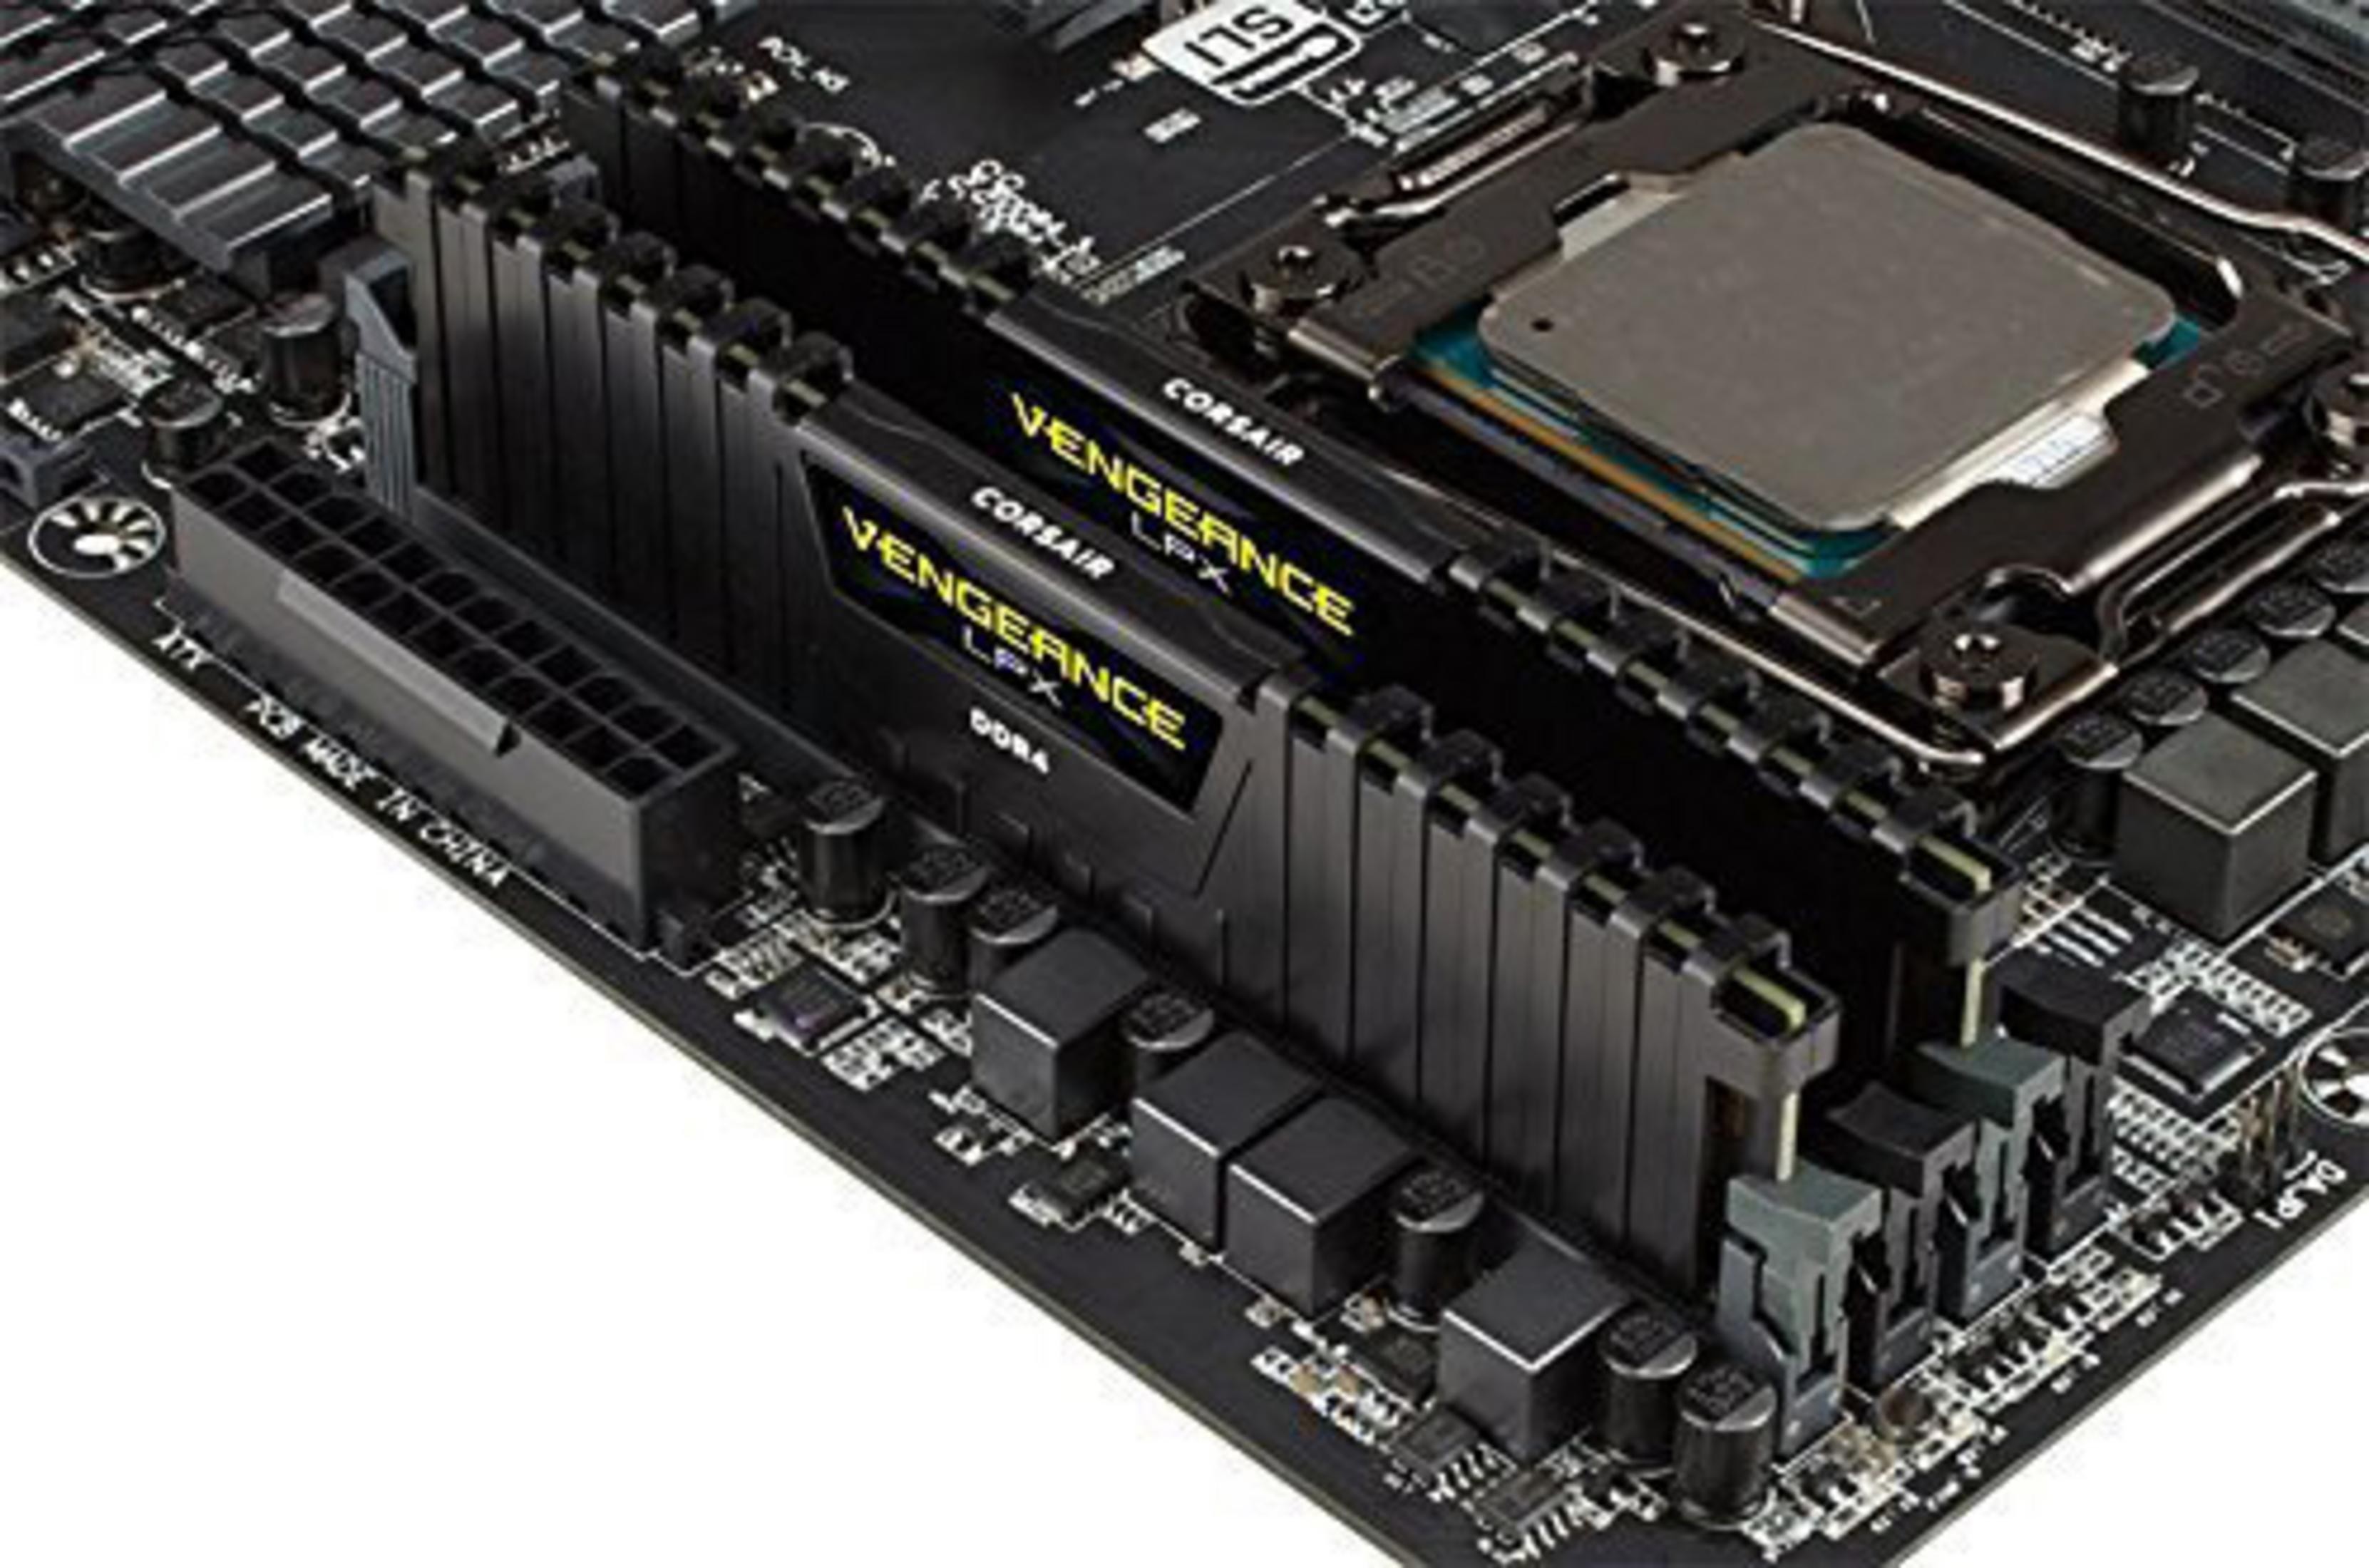 DDR4 16GB Arbeitsspeicher CORSAIR 16 CMK16GX4M2A2133C13 LPX VENGEANCE GB 2133MHZ DDR4